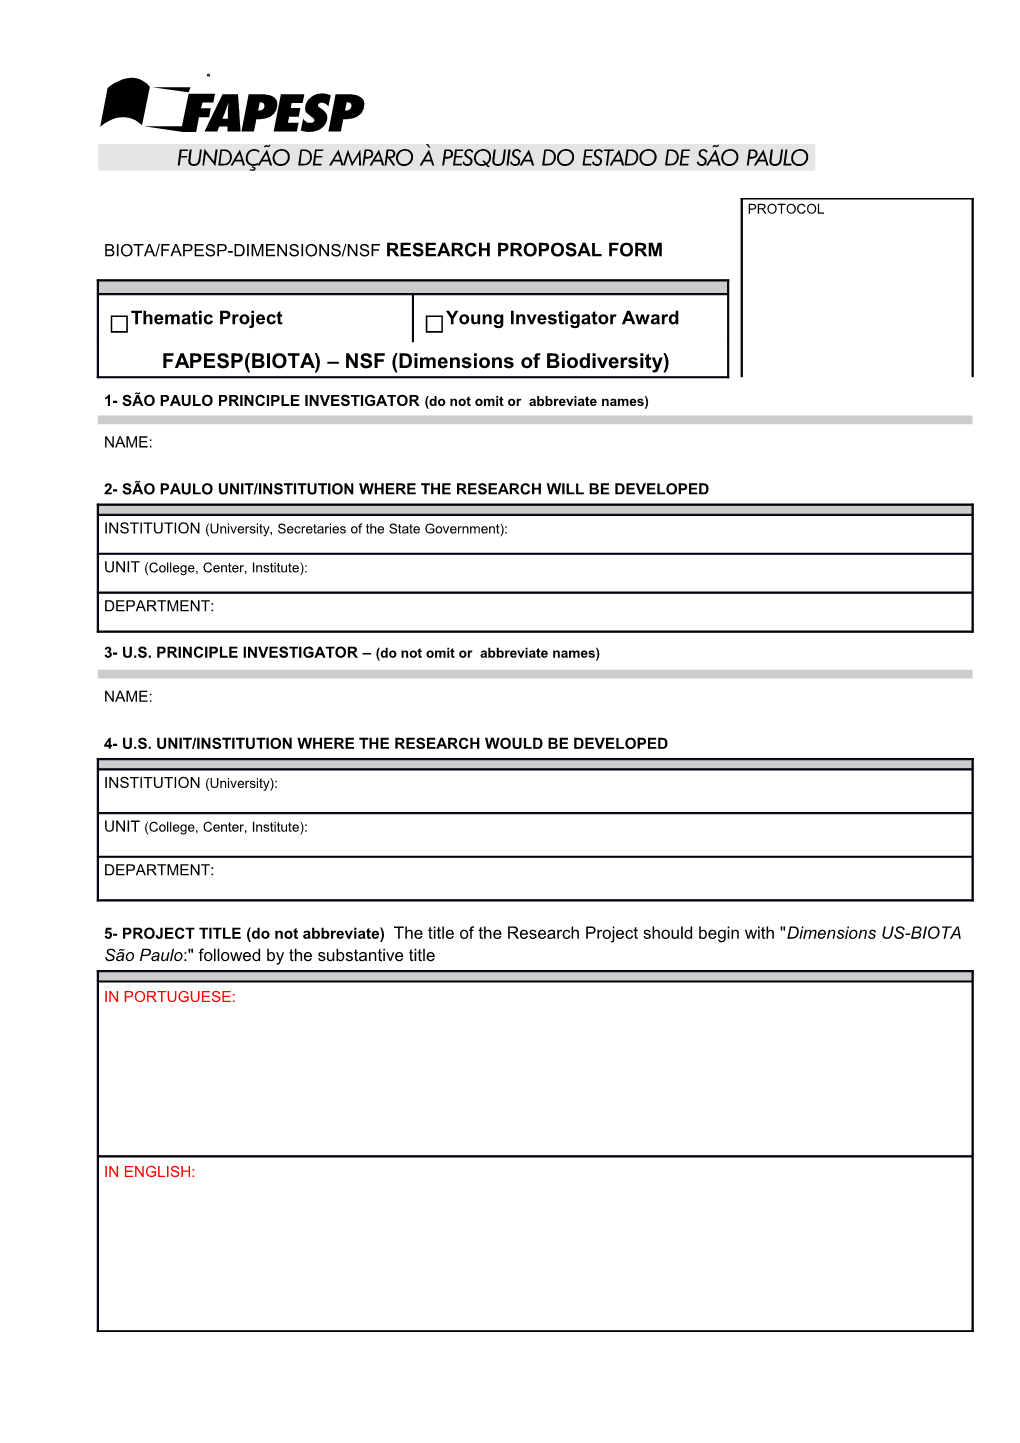 Biota/Fapesp-Dimensions/Nsf Research Proposal Form